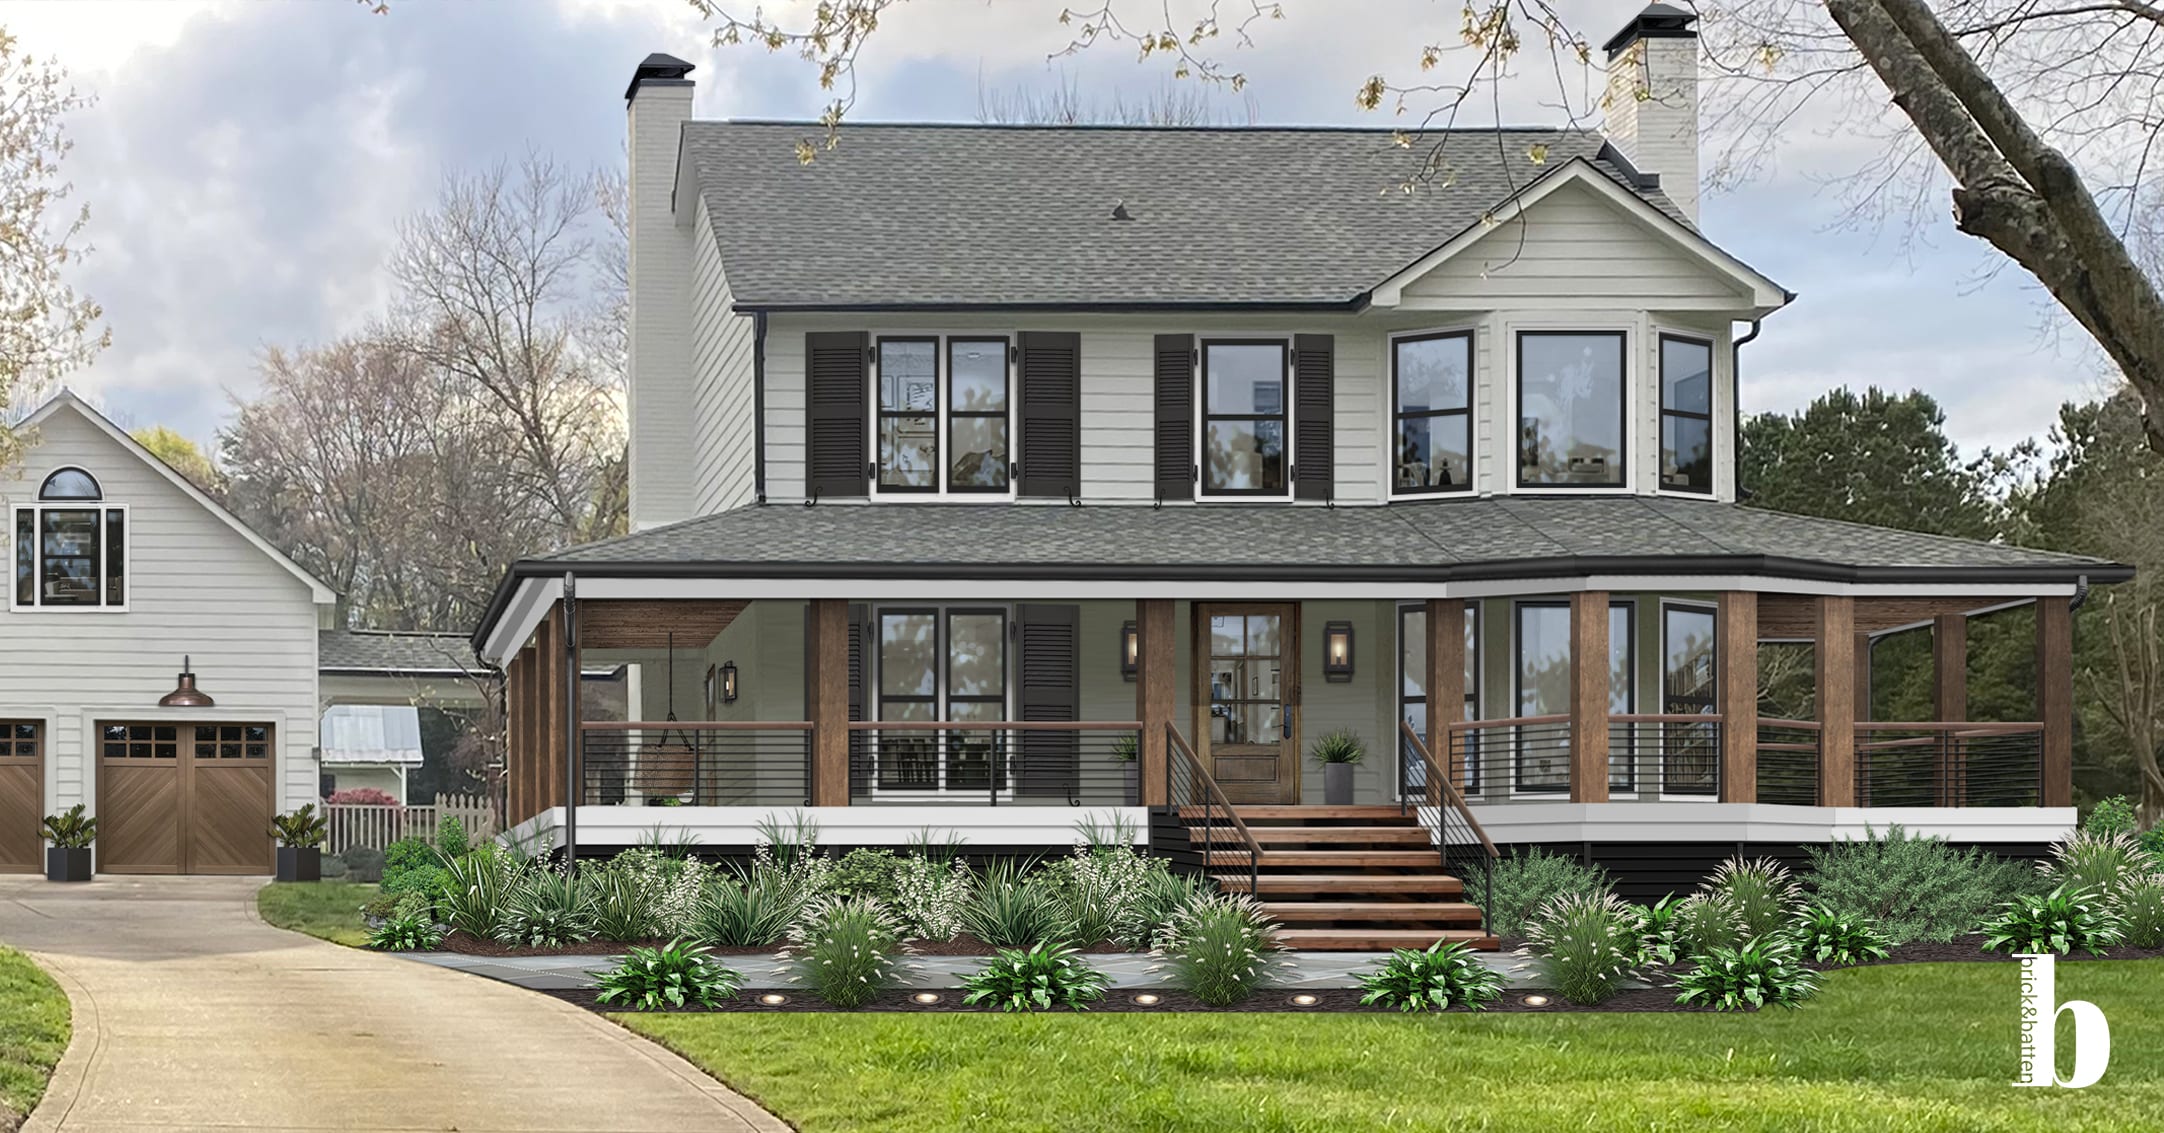 8 Wrap Around Porch Ideas for Your Home - brick&batten